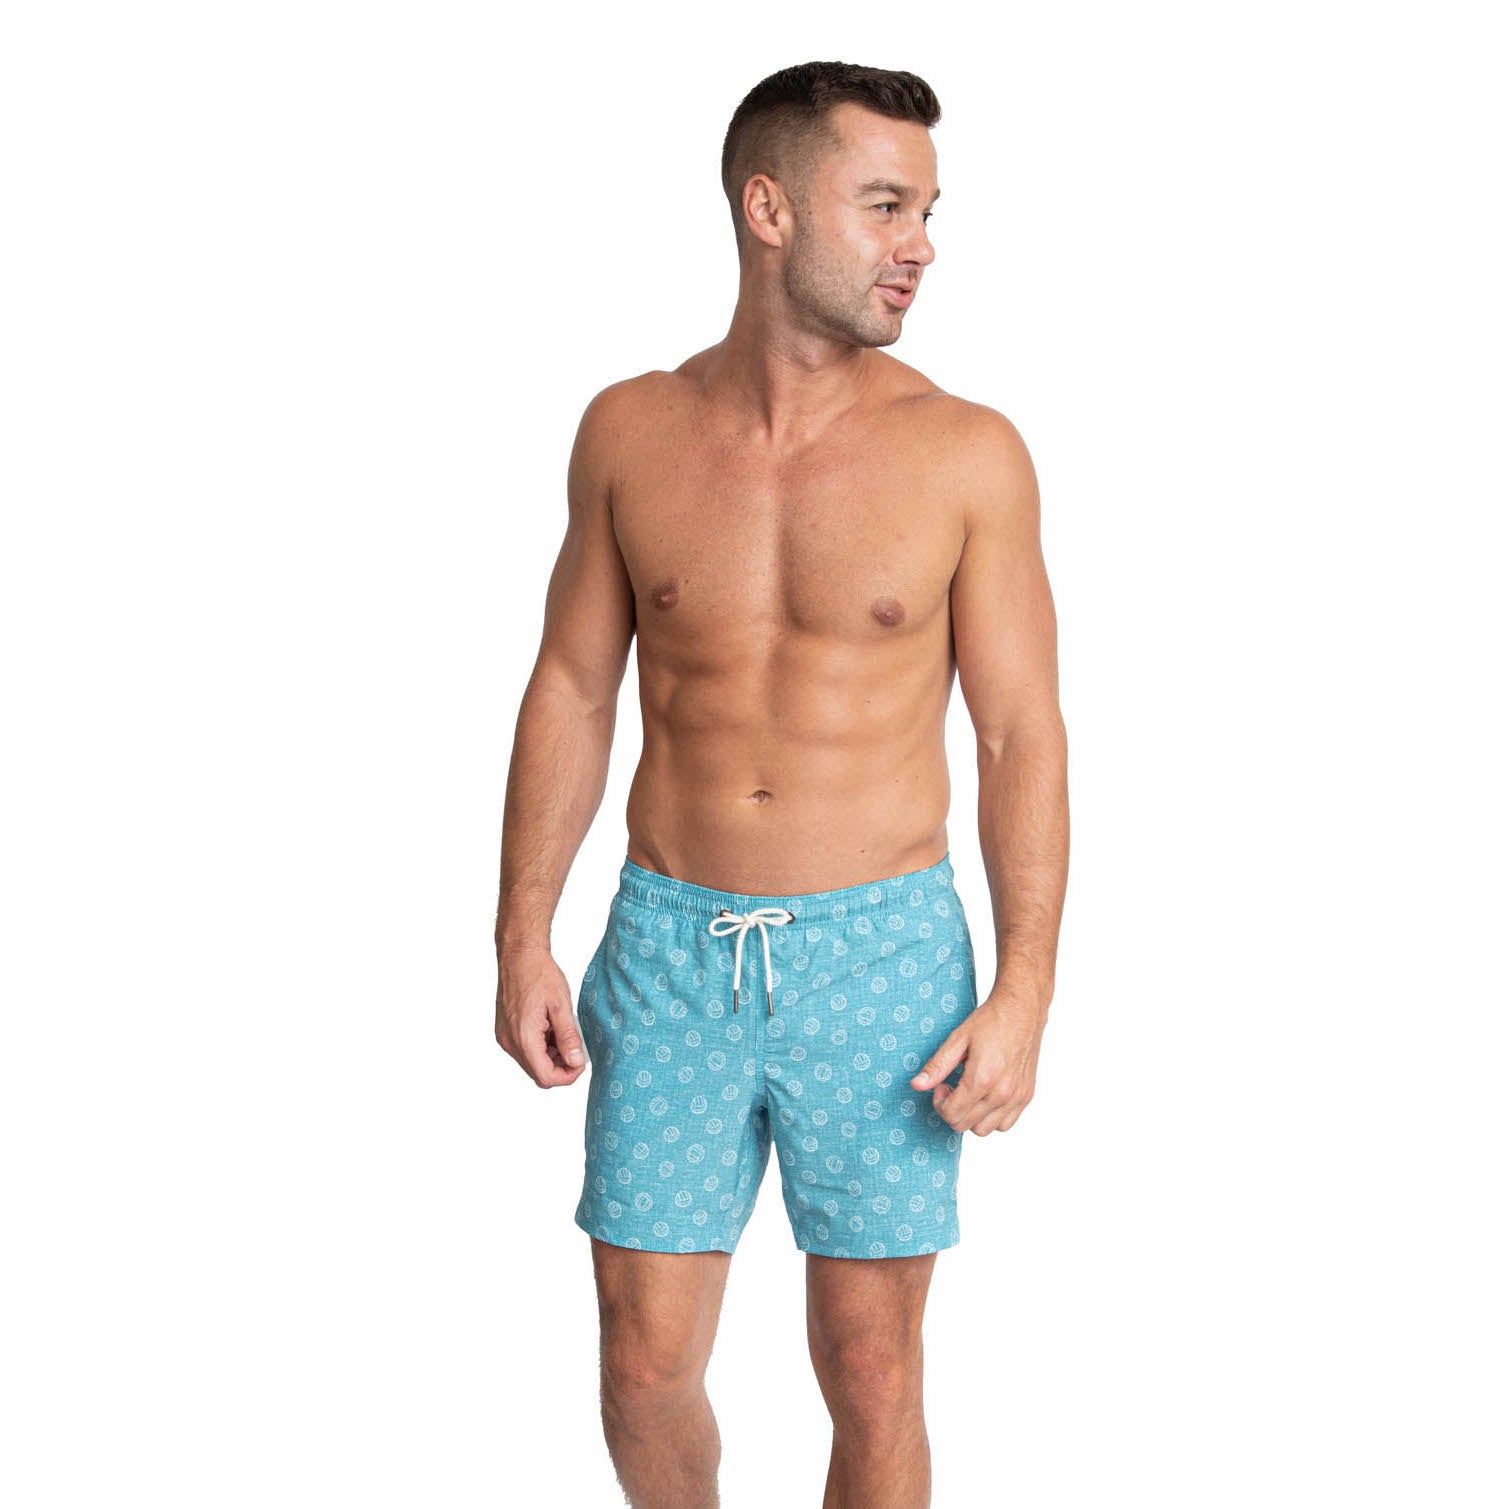 Mens swim trunks, swim suits, board shorts - boto swimwear